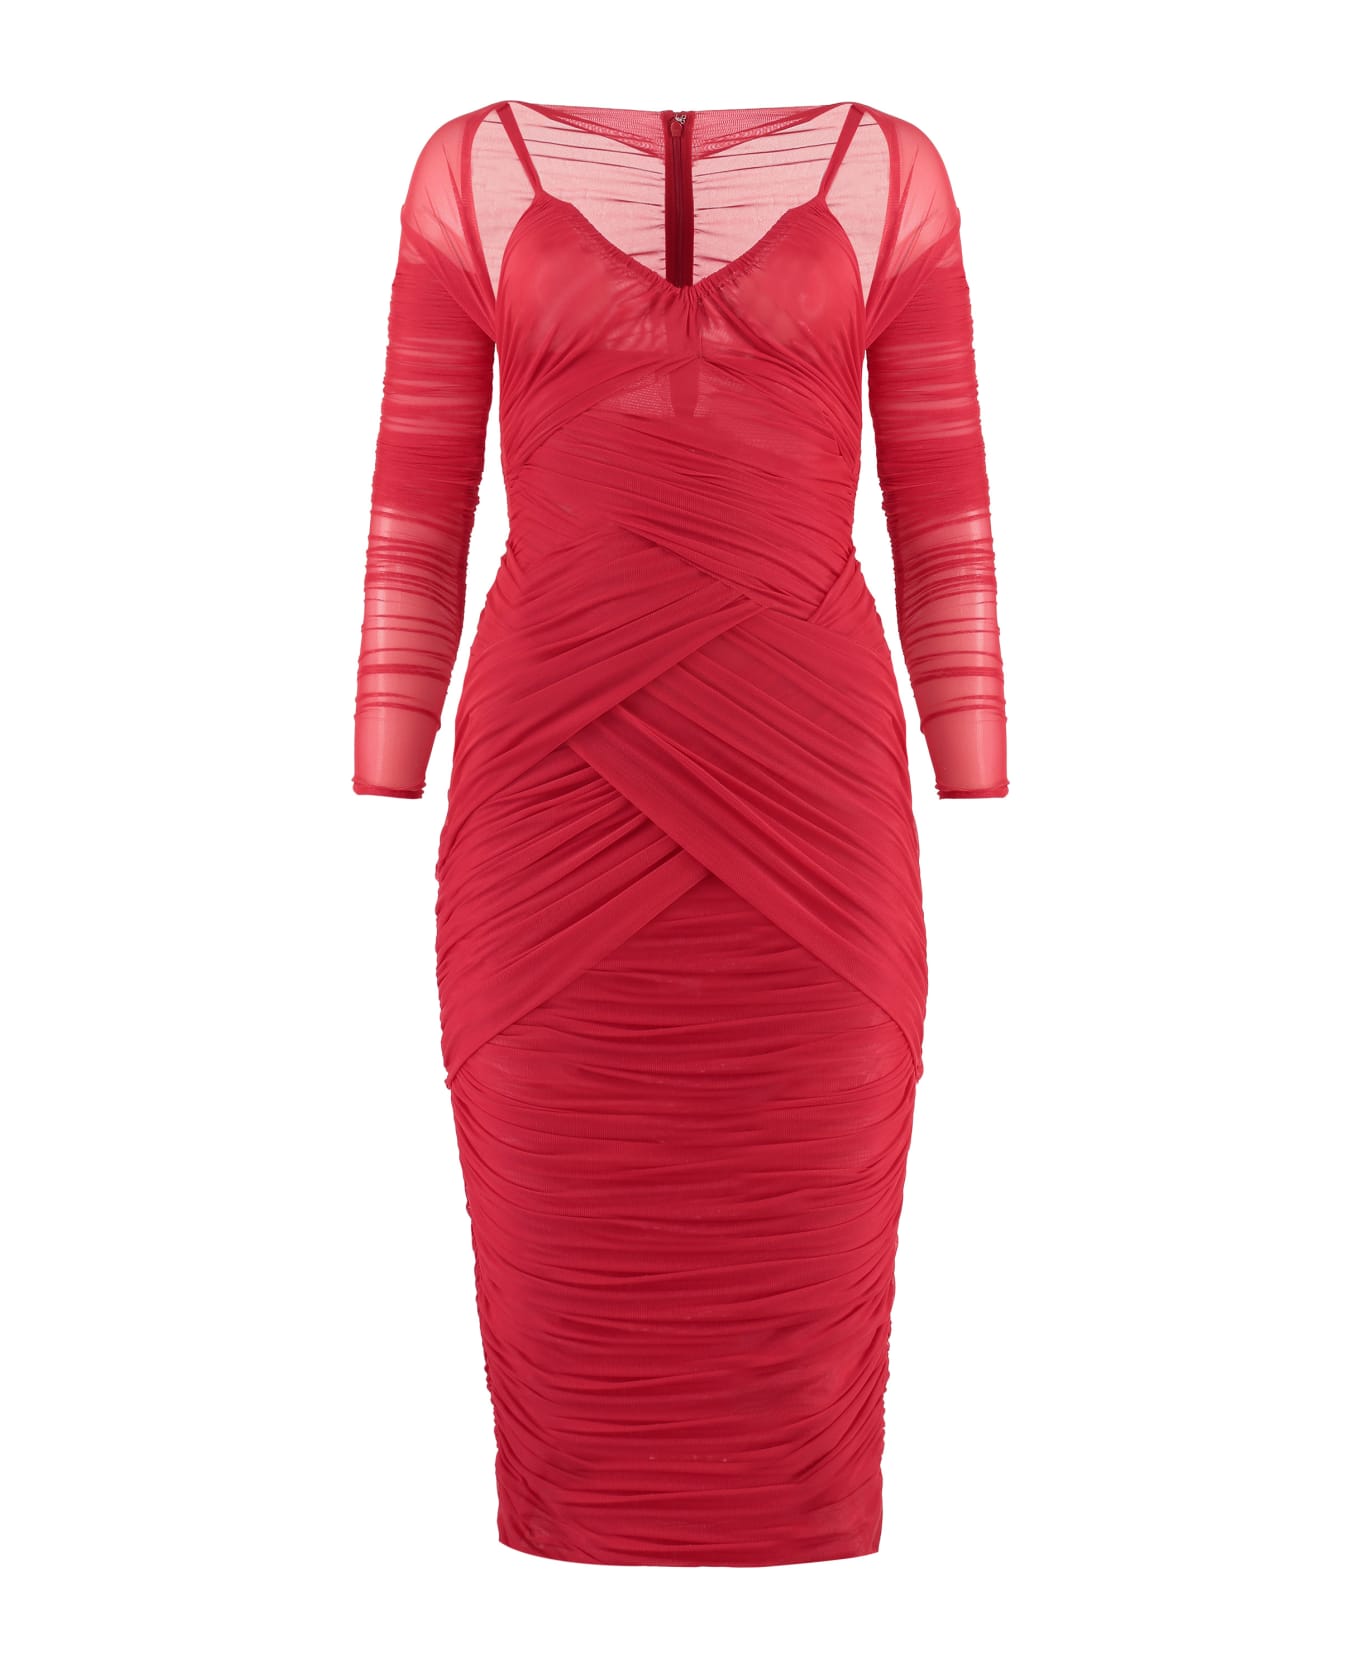 Dolce & Gabbana Draped Dress - red